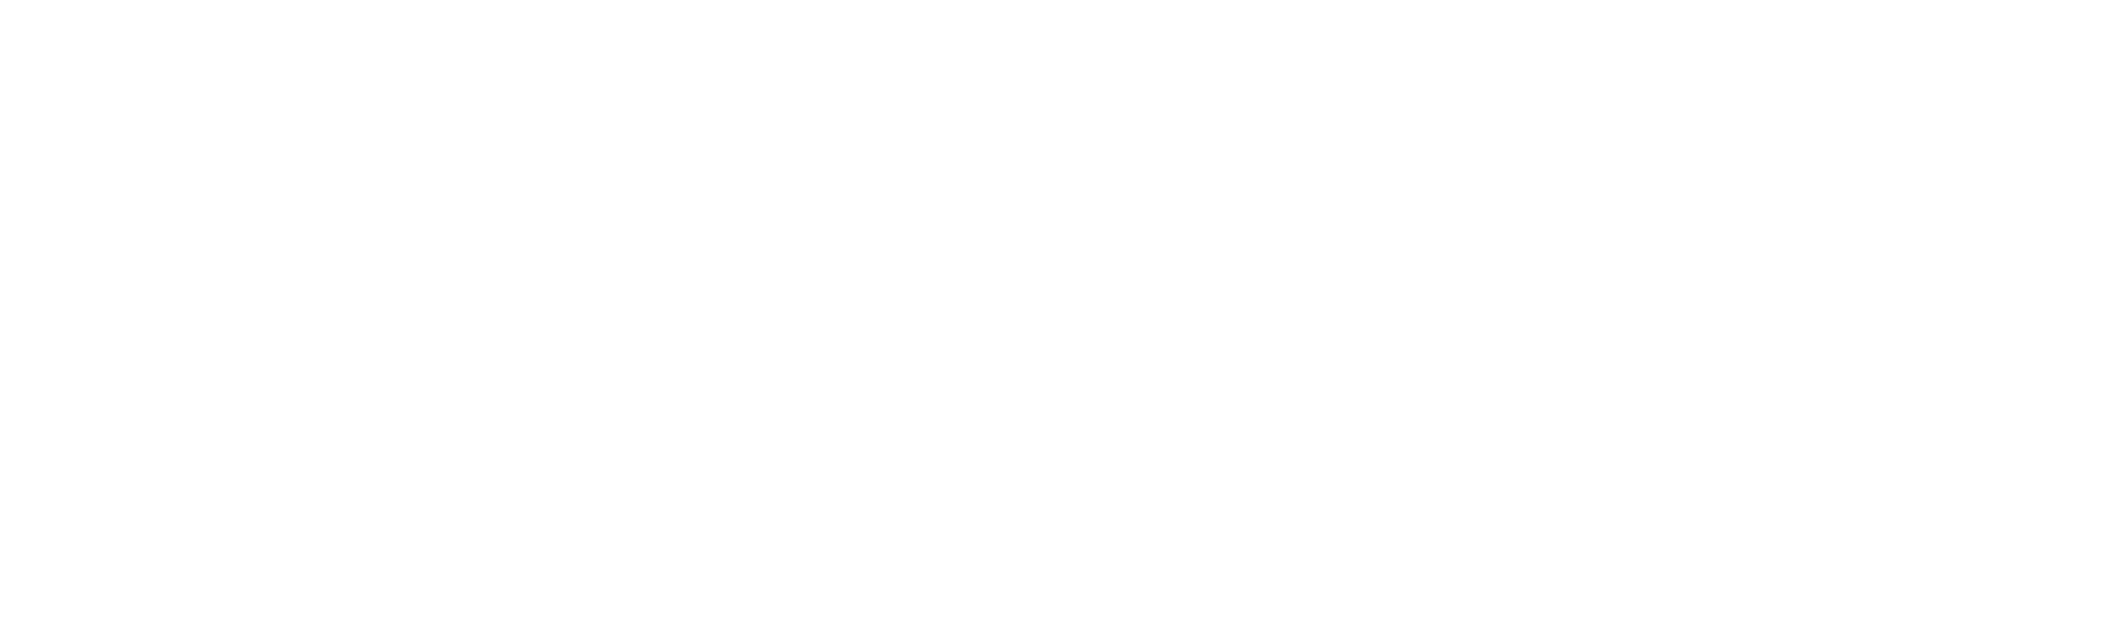 HUMAN_formerly_horiz_white (2)